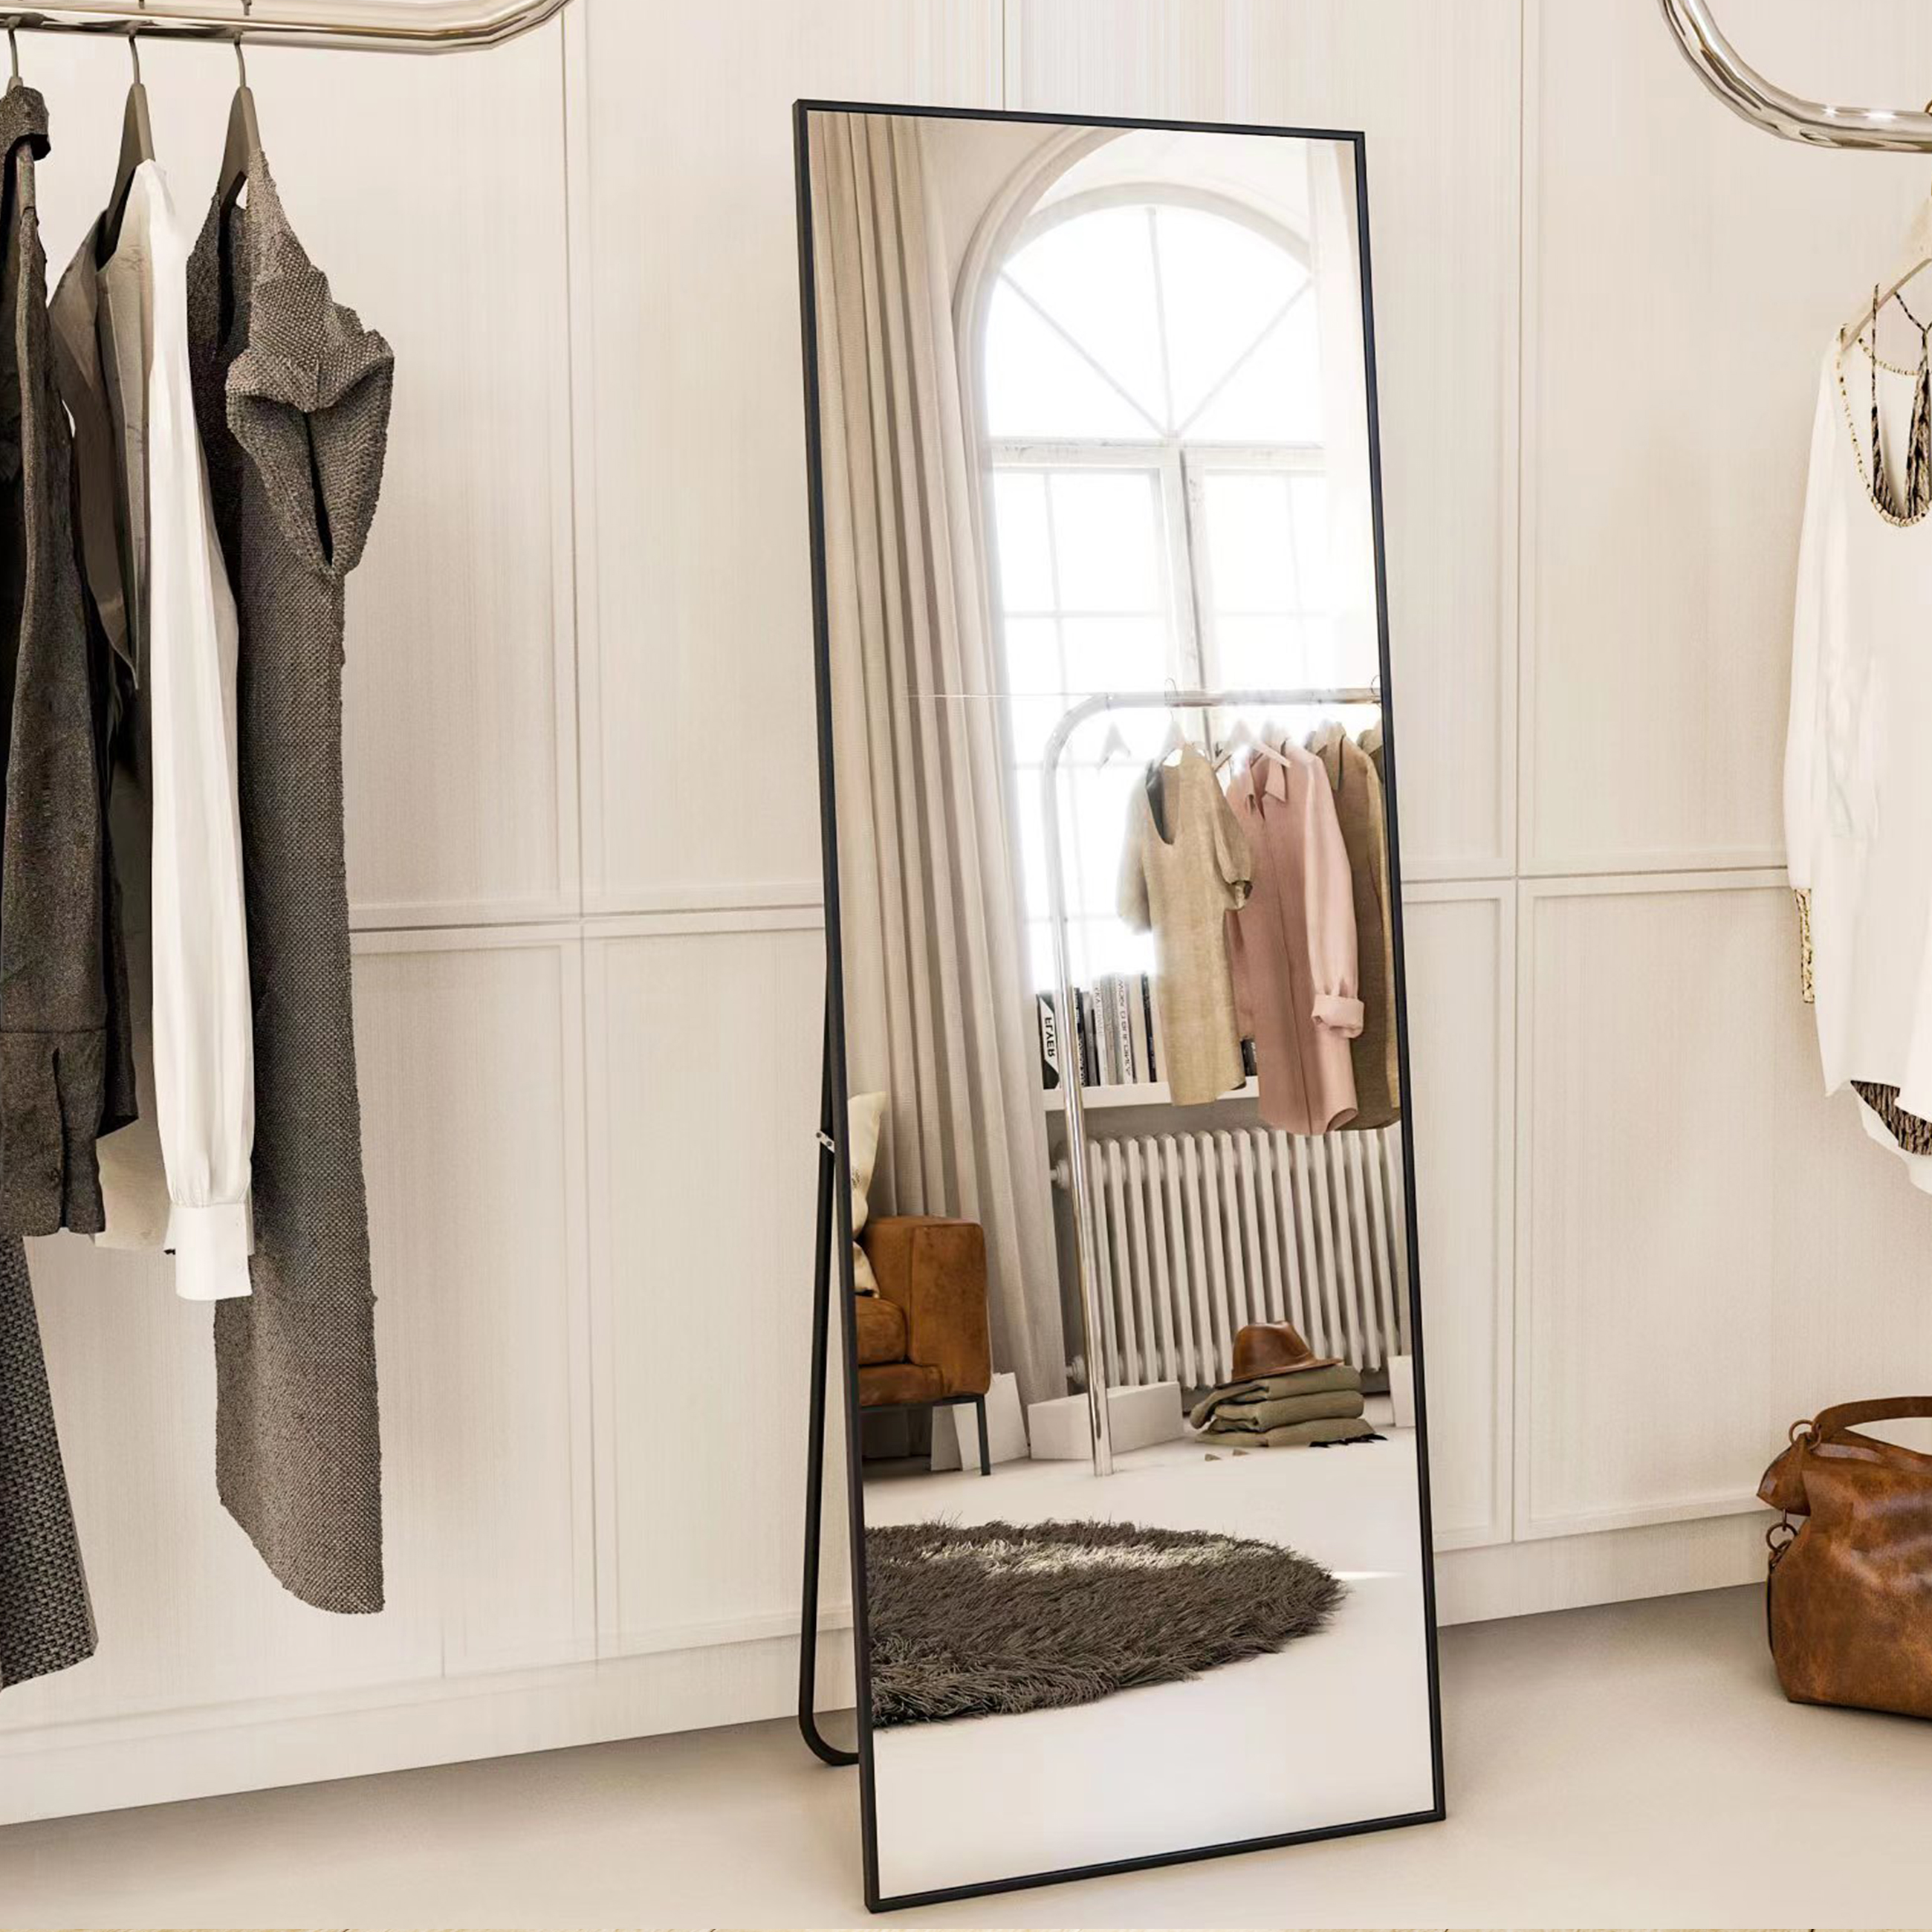 BEAUTYPEAK 64"x21" Full Length Mirror Rectangle Body Dressing Floor Standing Mirrors, Black - image 4 of 8